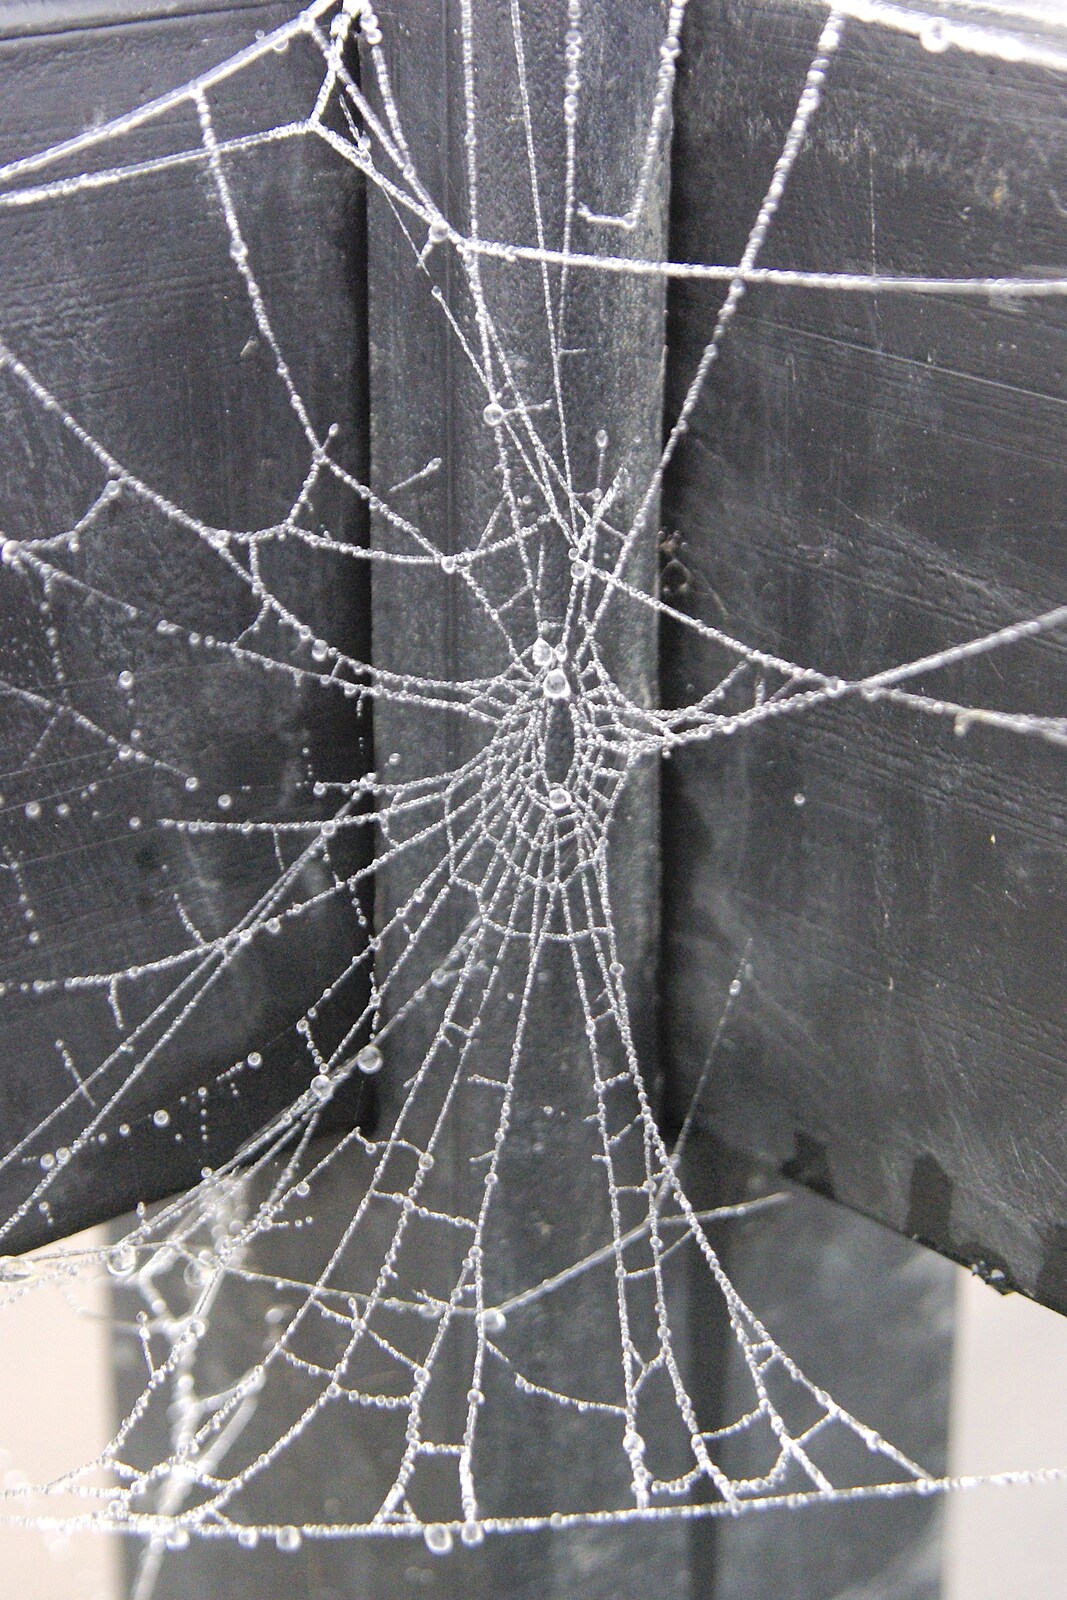 A dewey spider web from Qualcomm Cambridge's Christmas Do, Jesus College, Cambridge - 20th December 2006